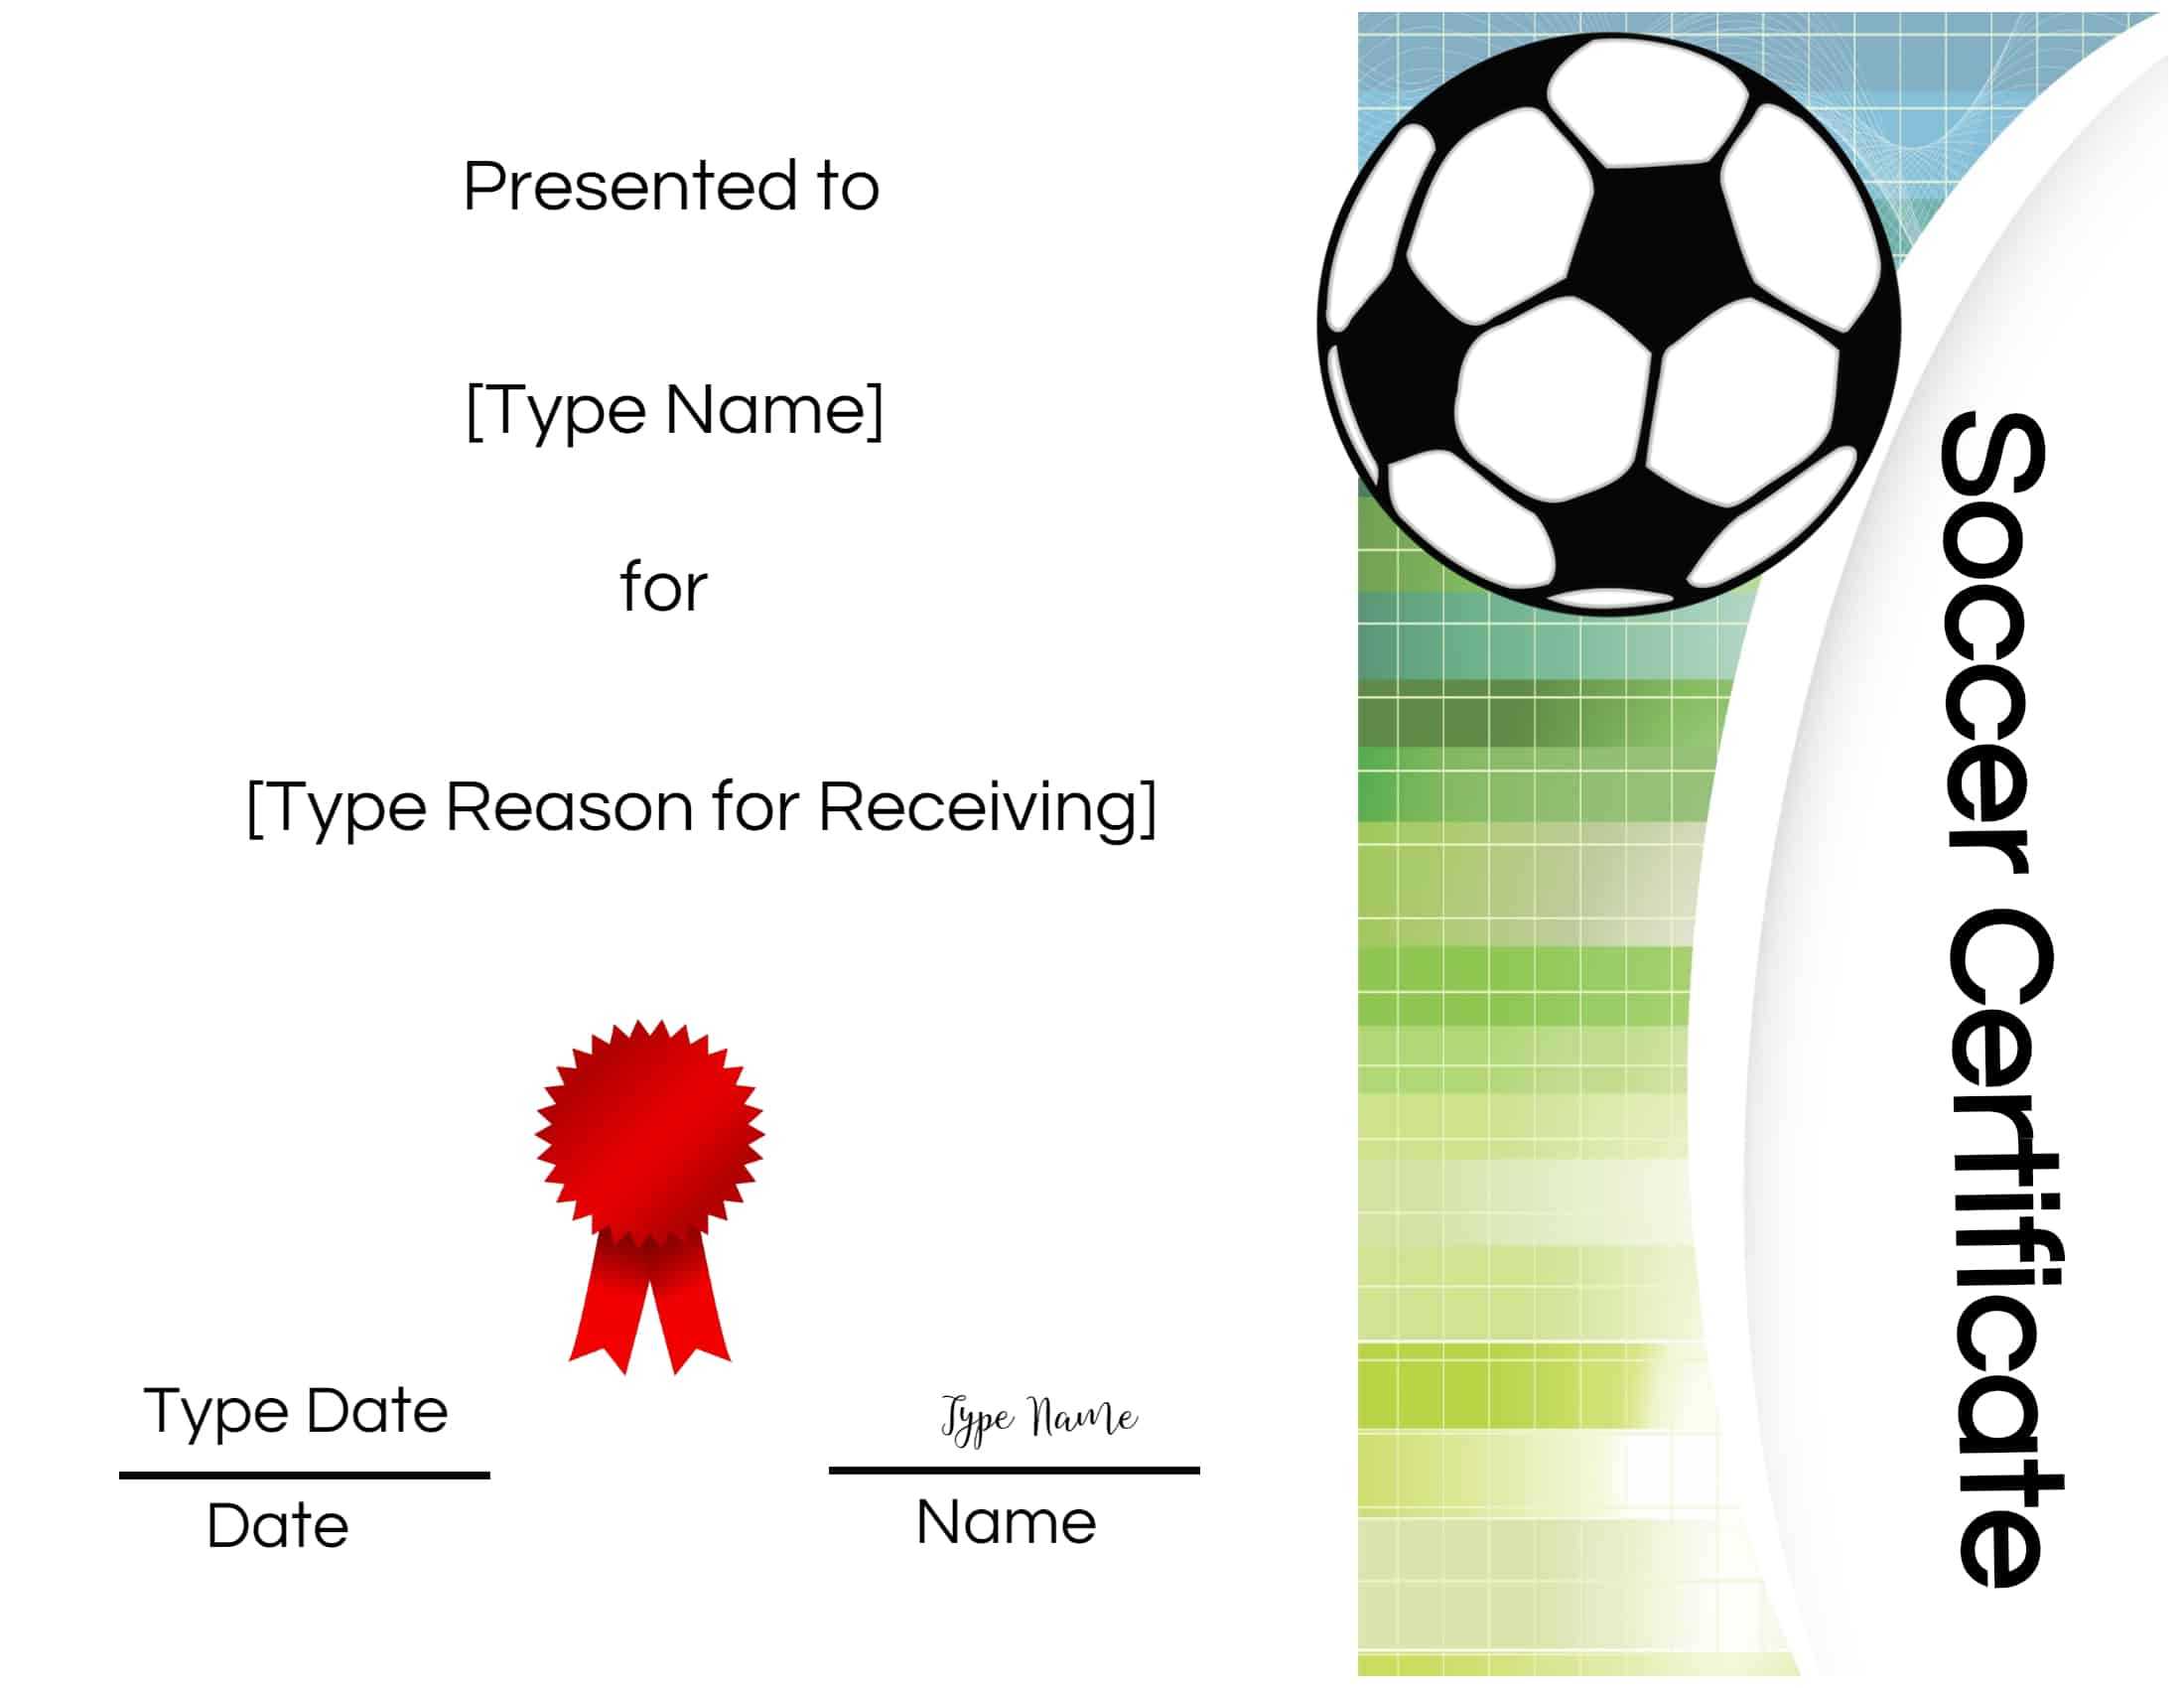 Free Soccer Certificate Maker | Edit Online And Print At Home Inside Soccer Award Certificate Template